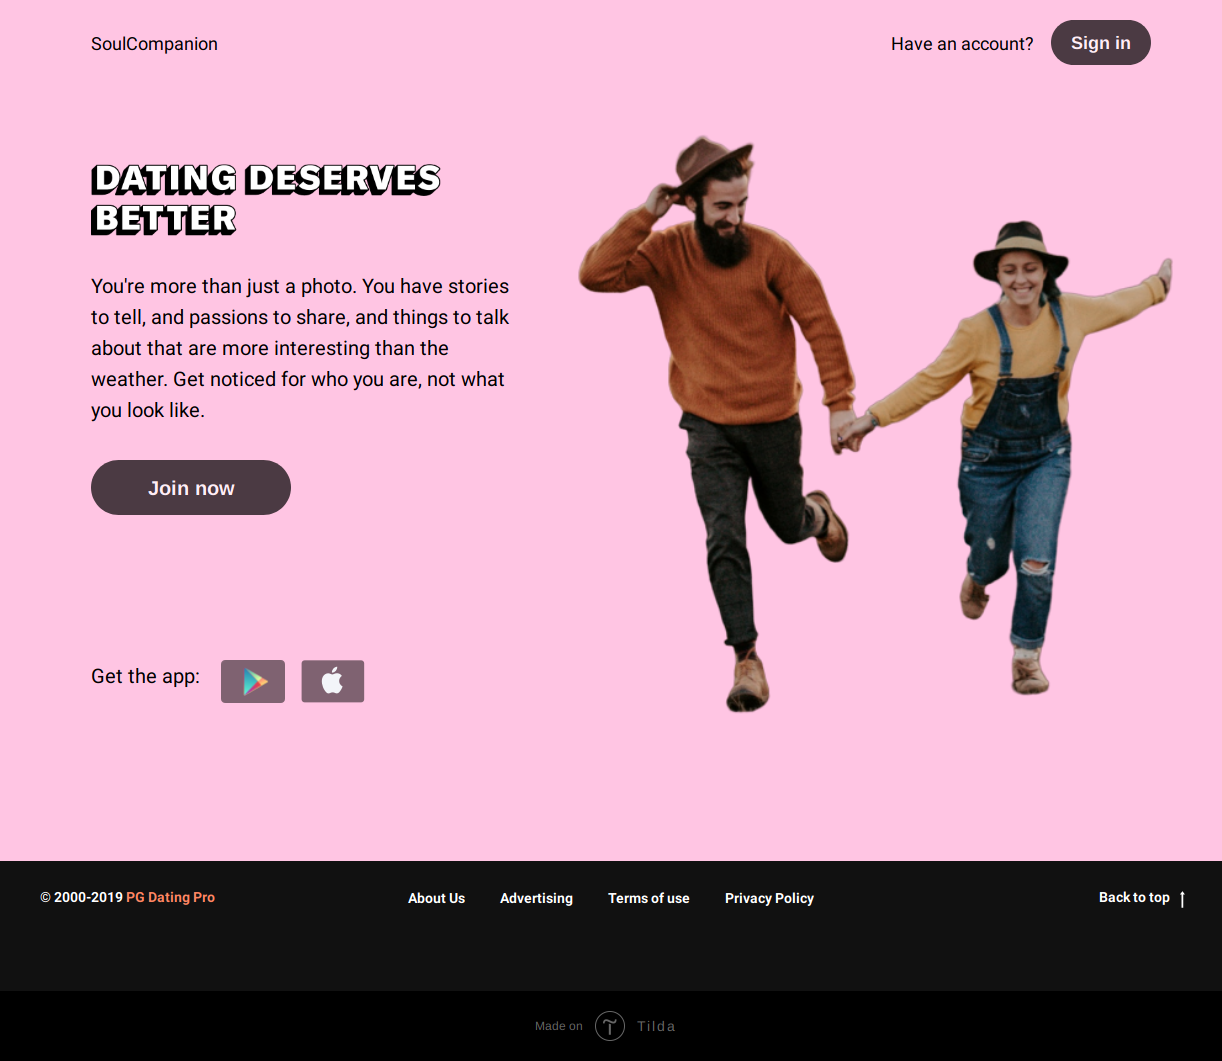 Dating deserves better - dating website template